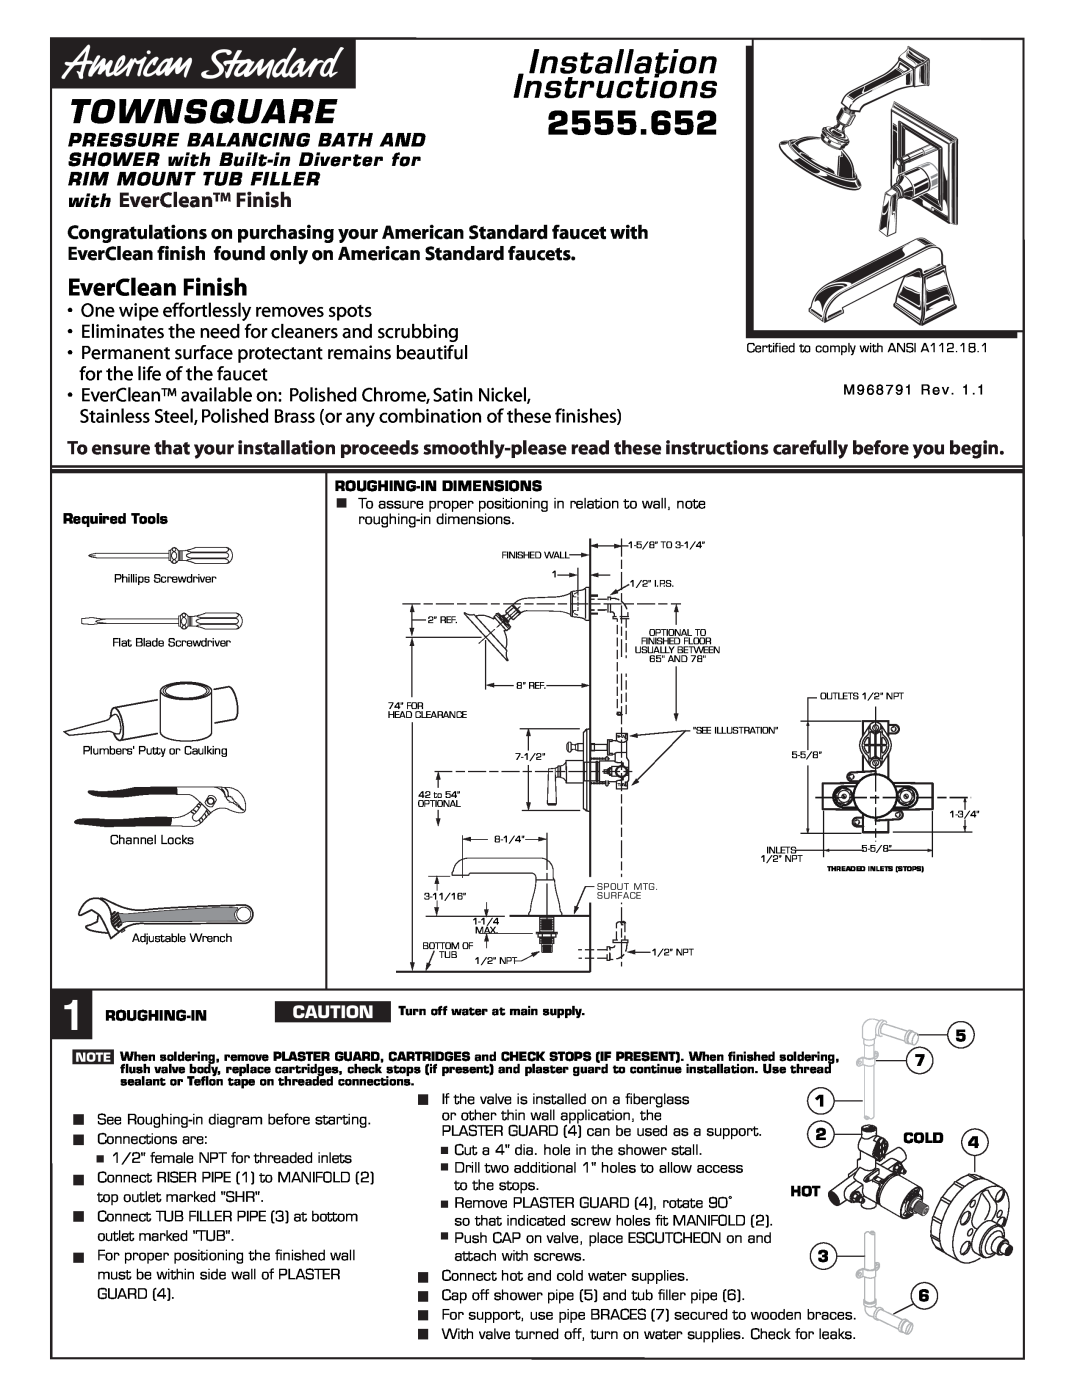 American Standard installation instructions Installation Instructions, TOWNSQUARE2555.652, EverClean Finish 